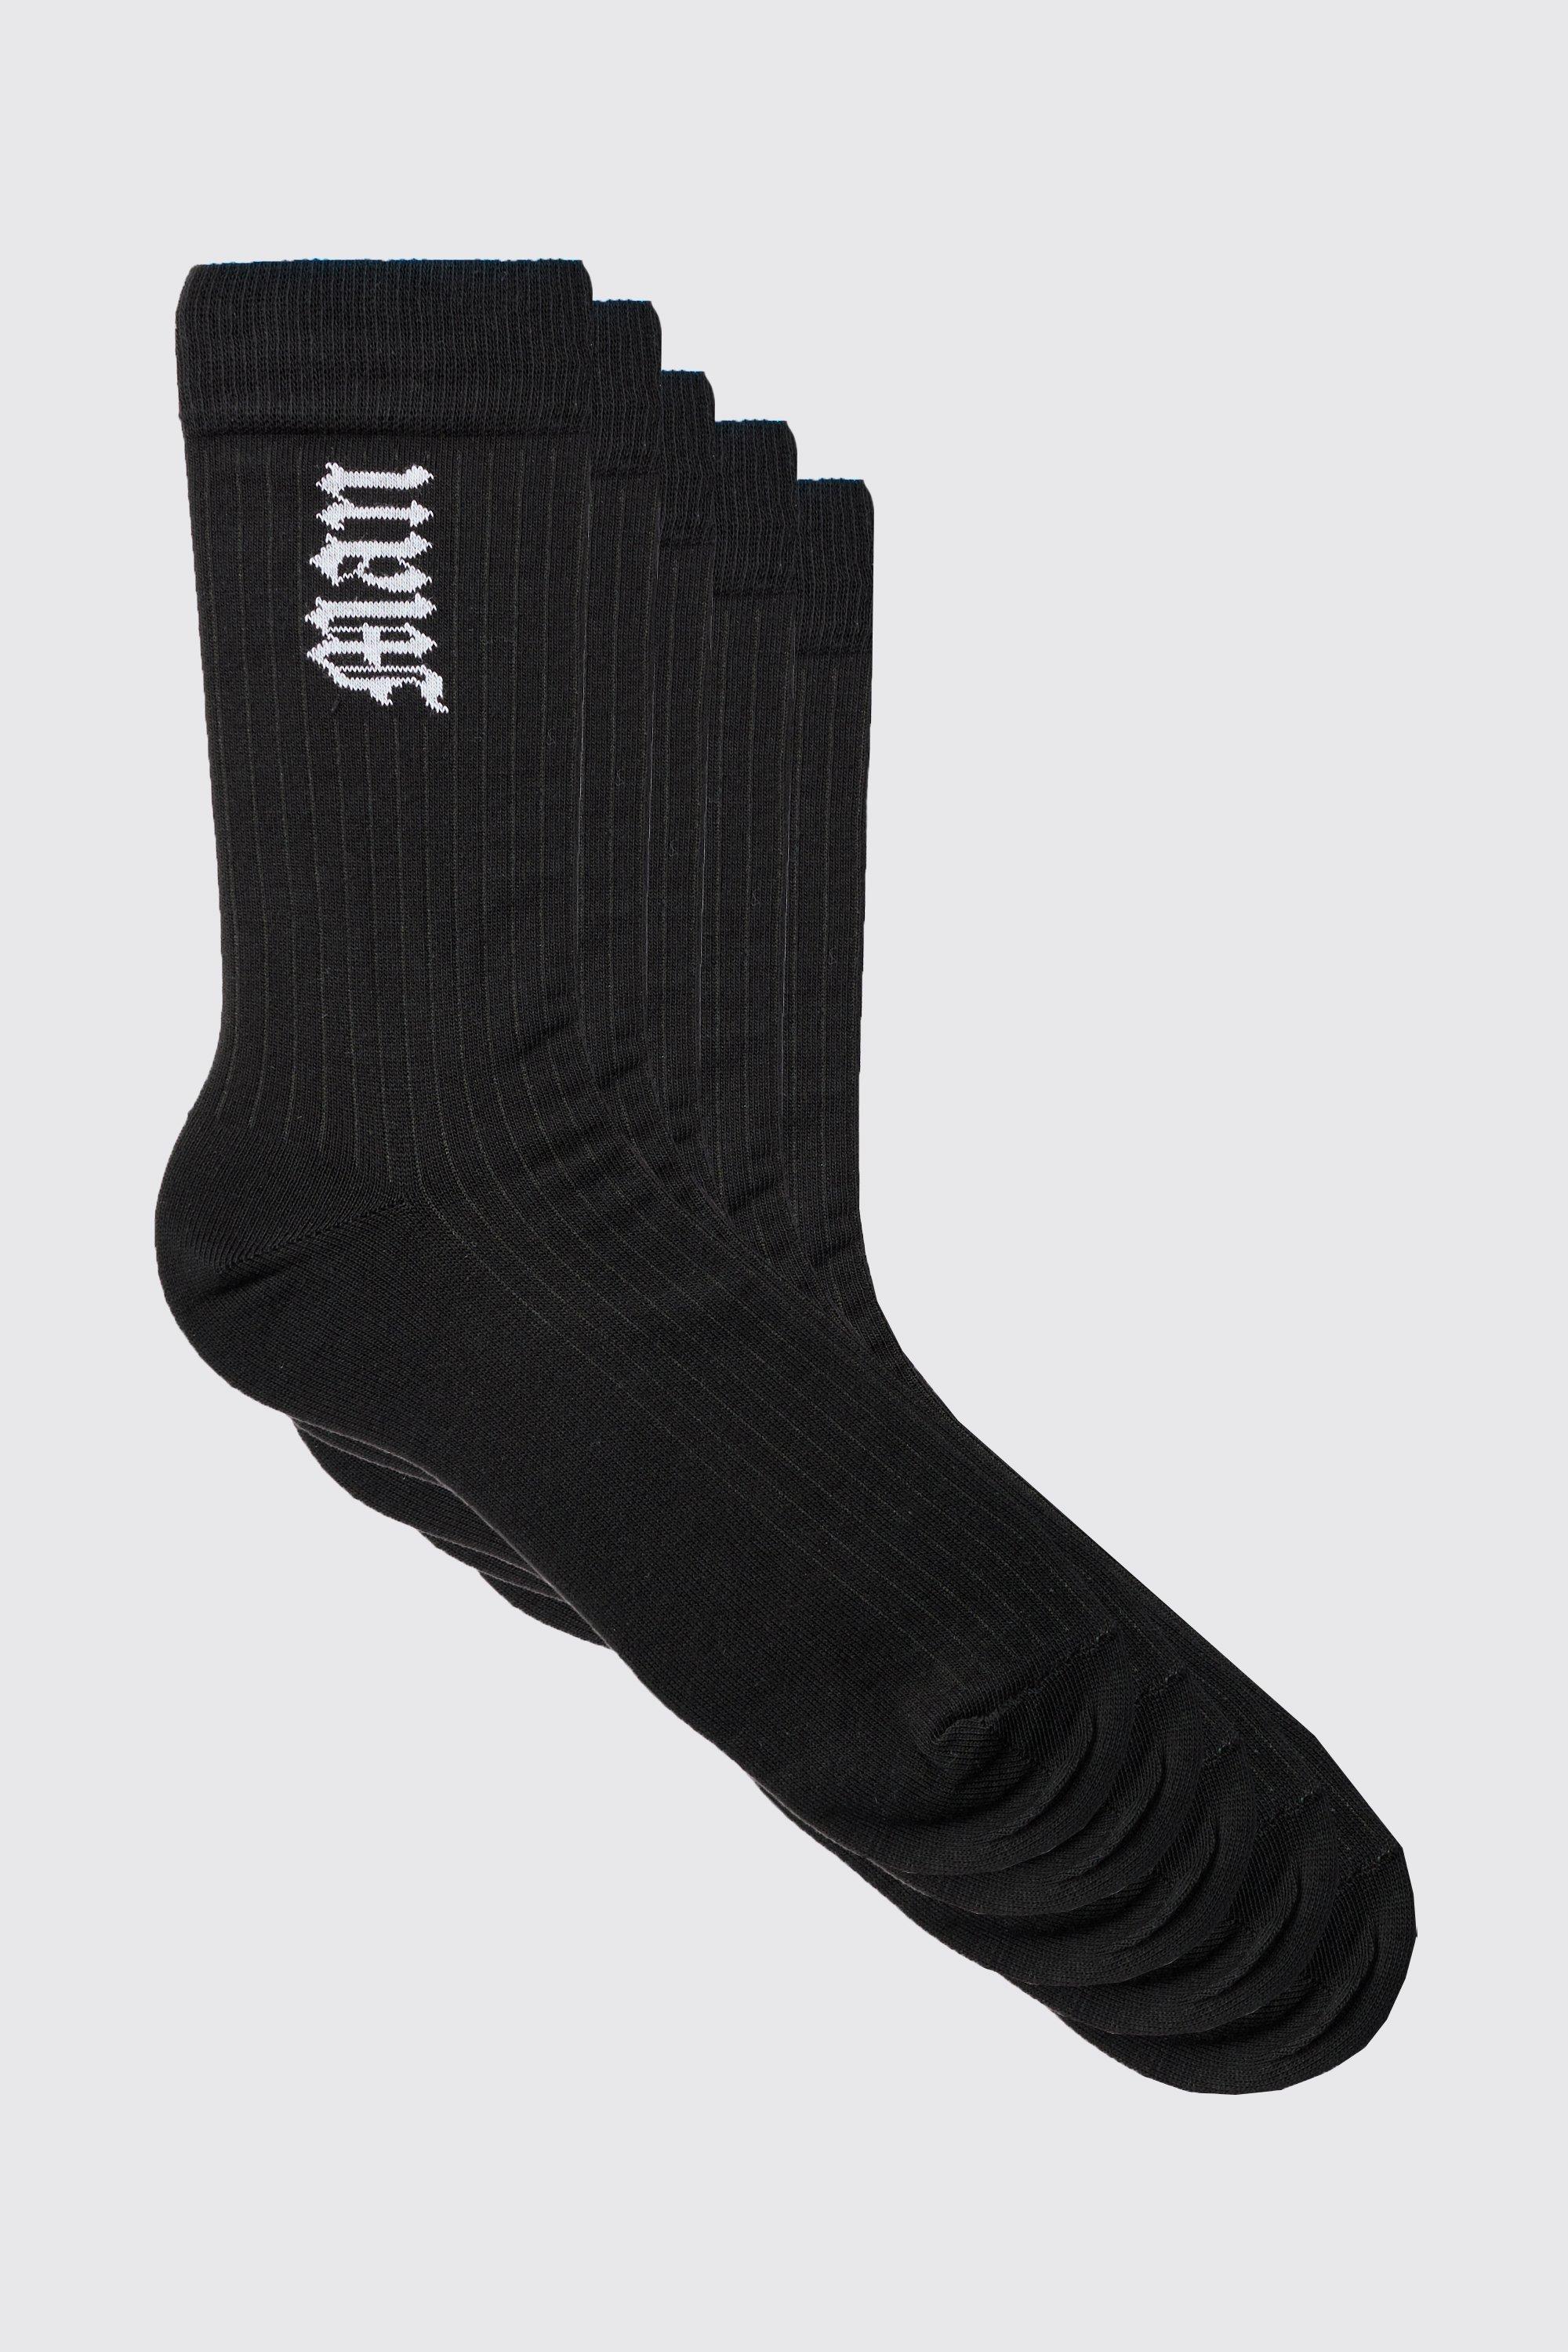 Mens Black 5 Pack Gothic Man Sports Socks, Black